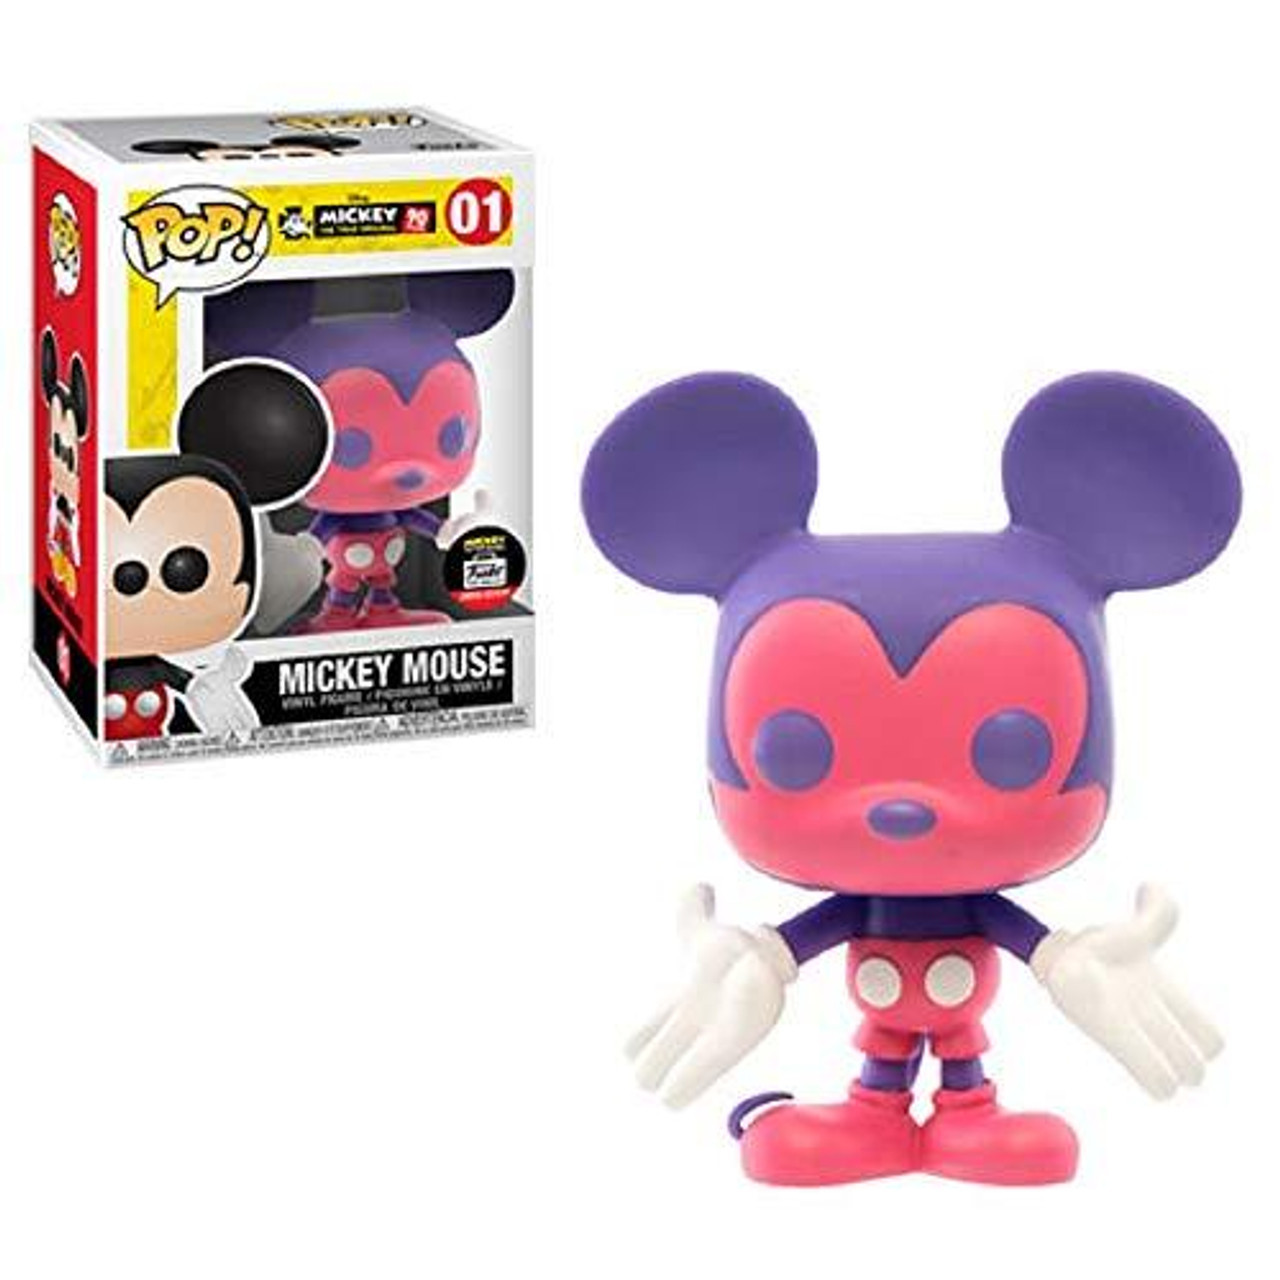 Funko POP! Disney - Mickey, The True Original 90 Years - Brave Little